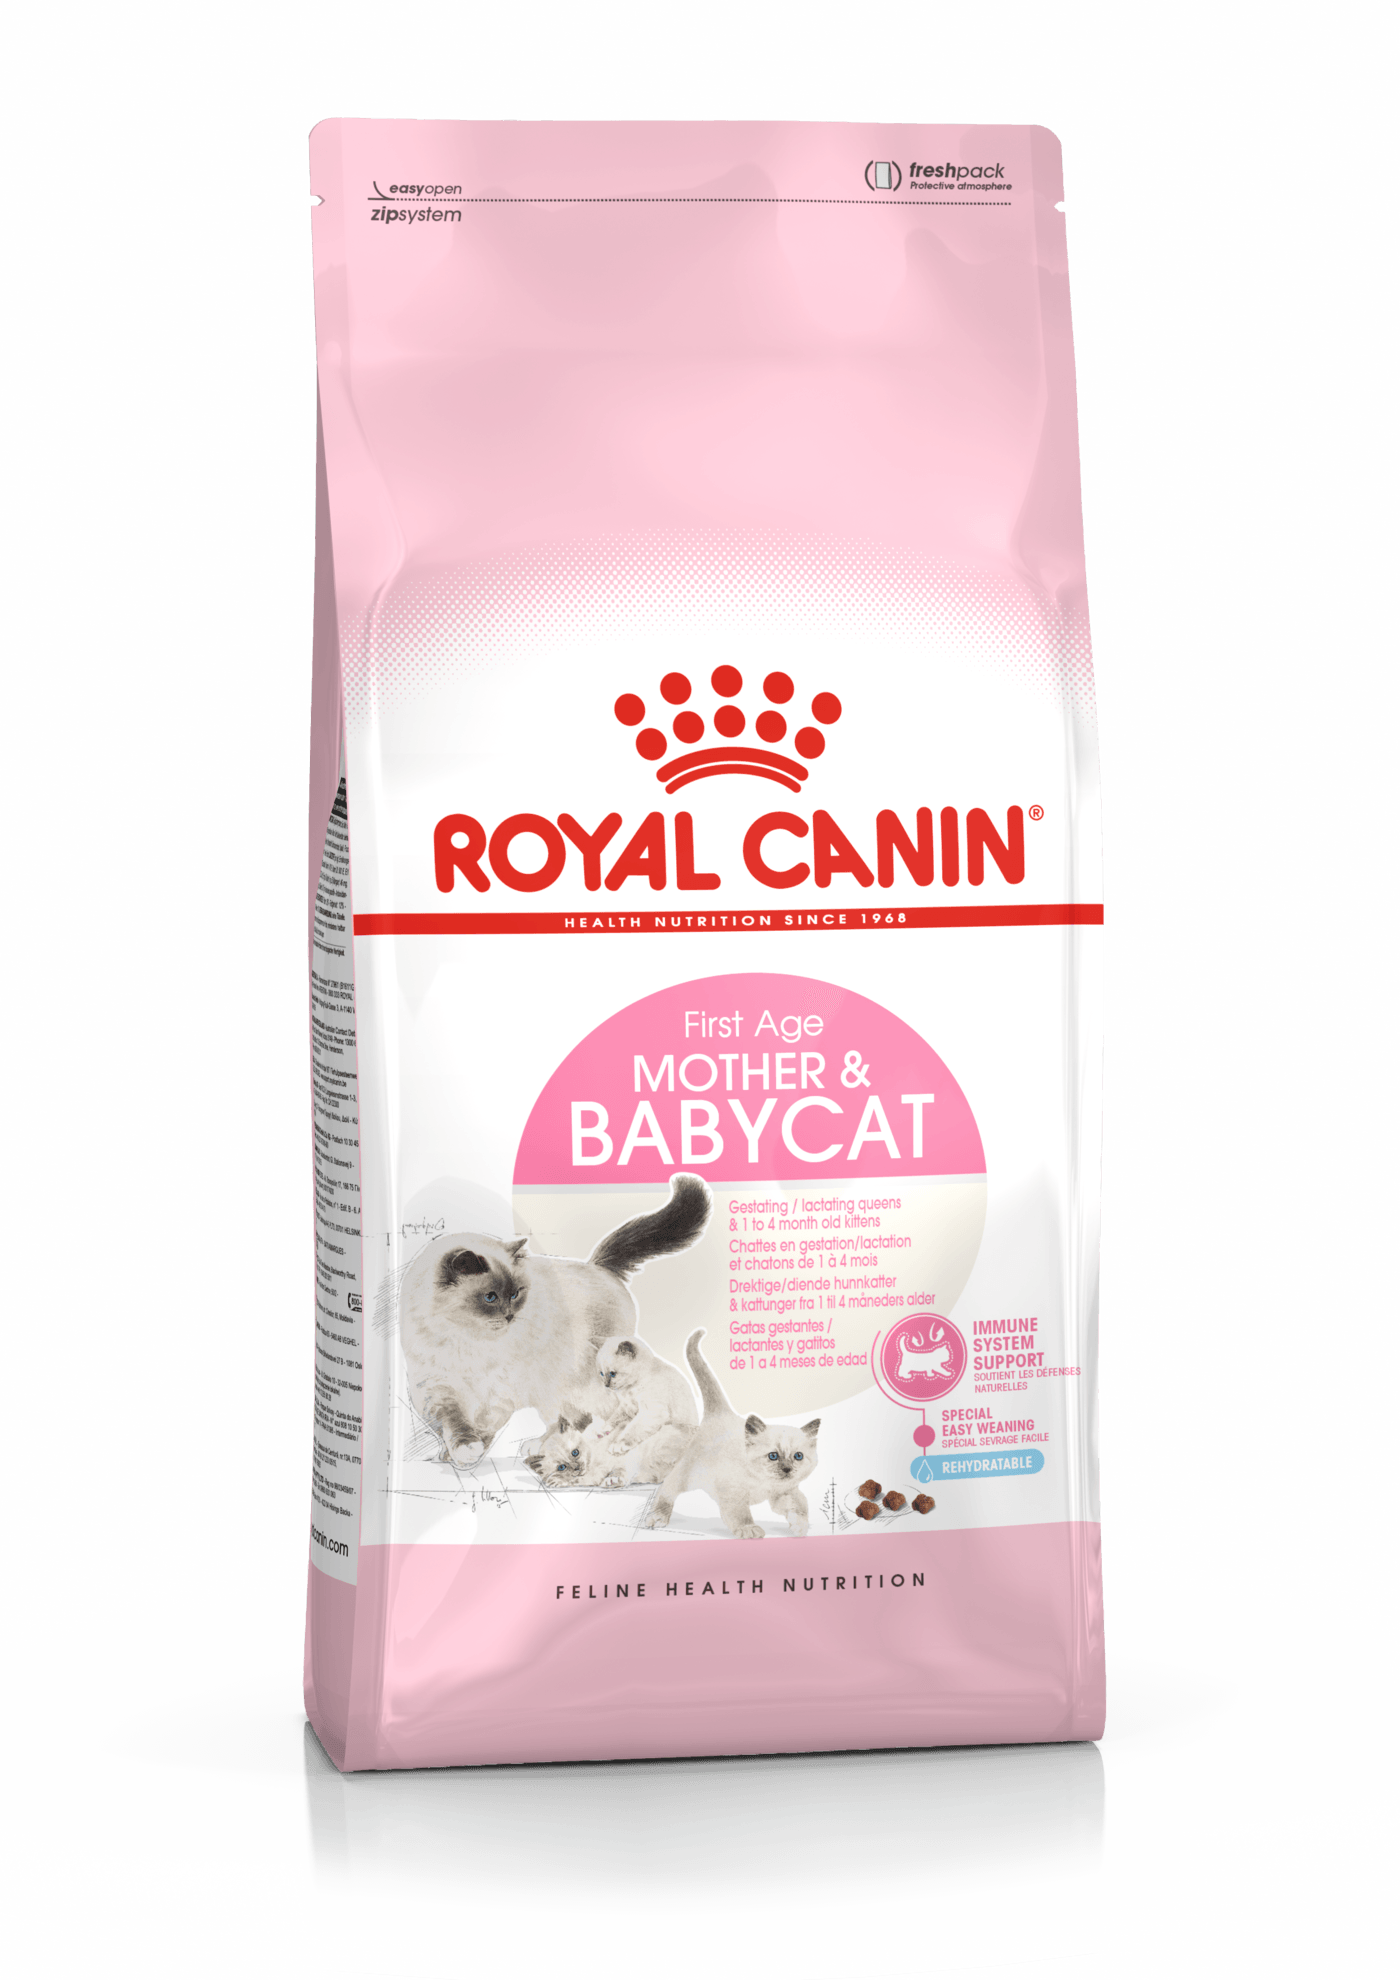 【Royal Canin】法國皇家貓乾糧 - 離乳貓及母貓營養配方貓乾糧 - Pet Pet Plaza